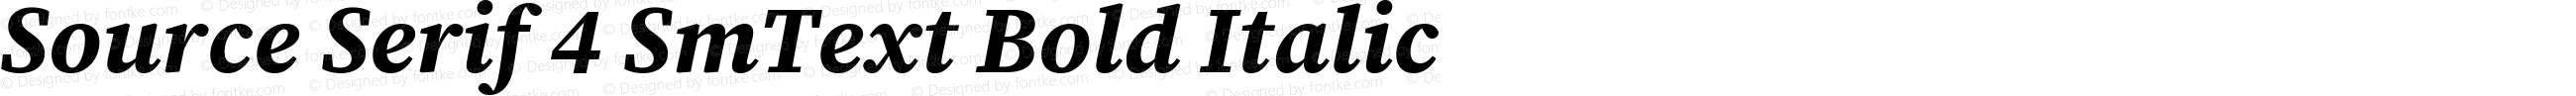 Source Serif 4 SmText Bold Italic